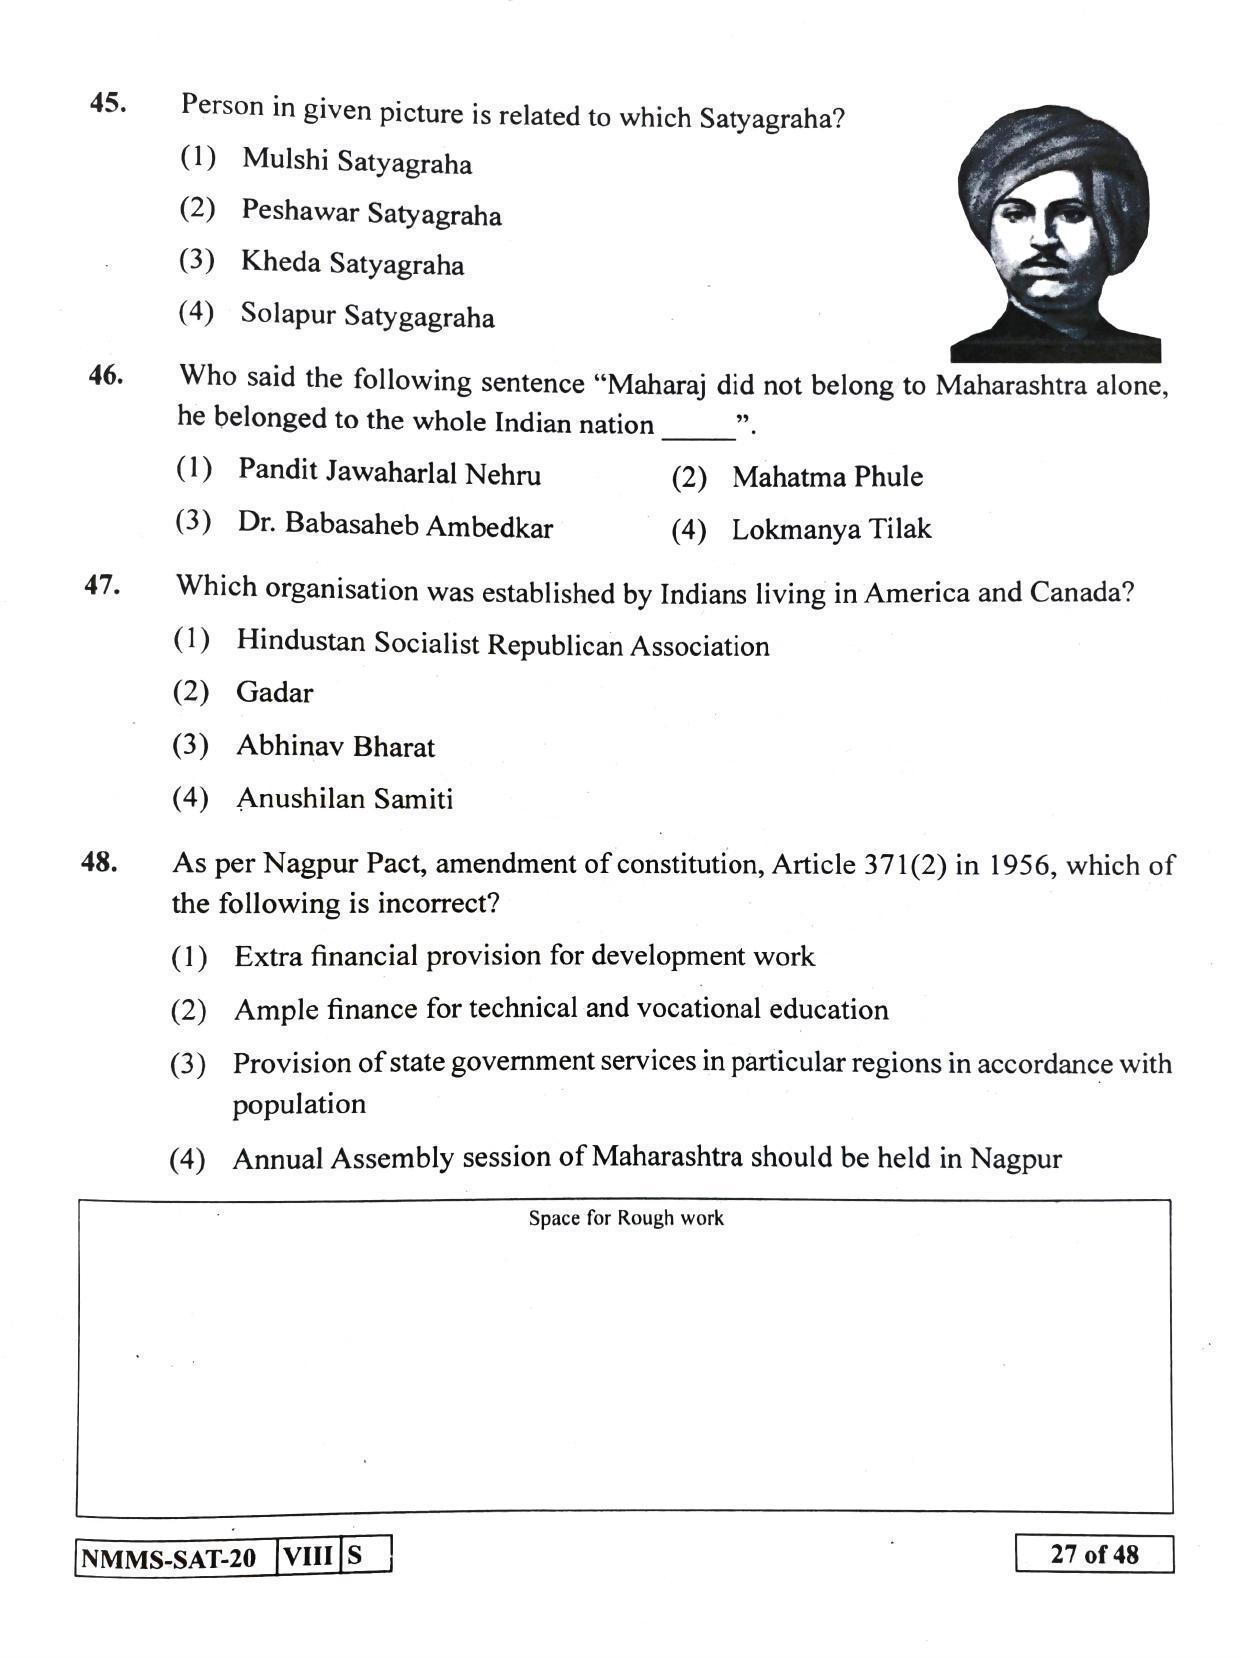 SAT HINDI 2020-21 Class 8 Maharashtra NMMS Question Papers - Page 27